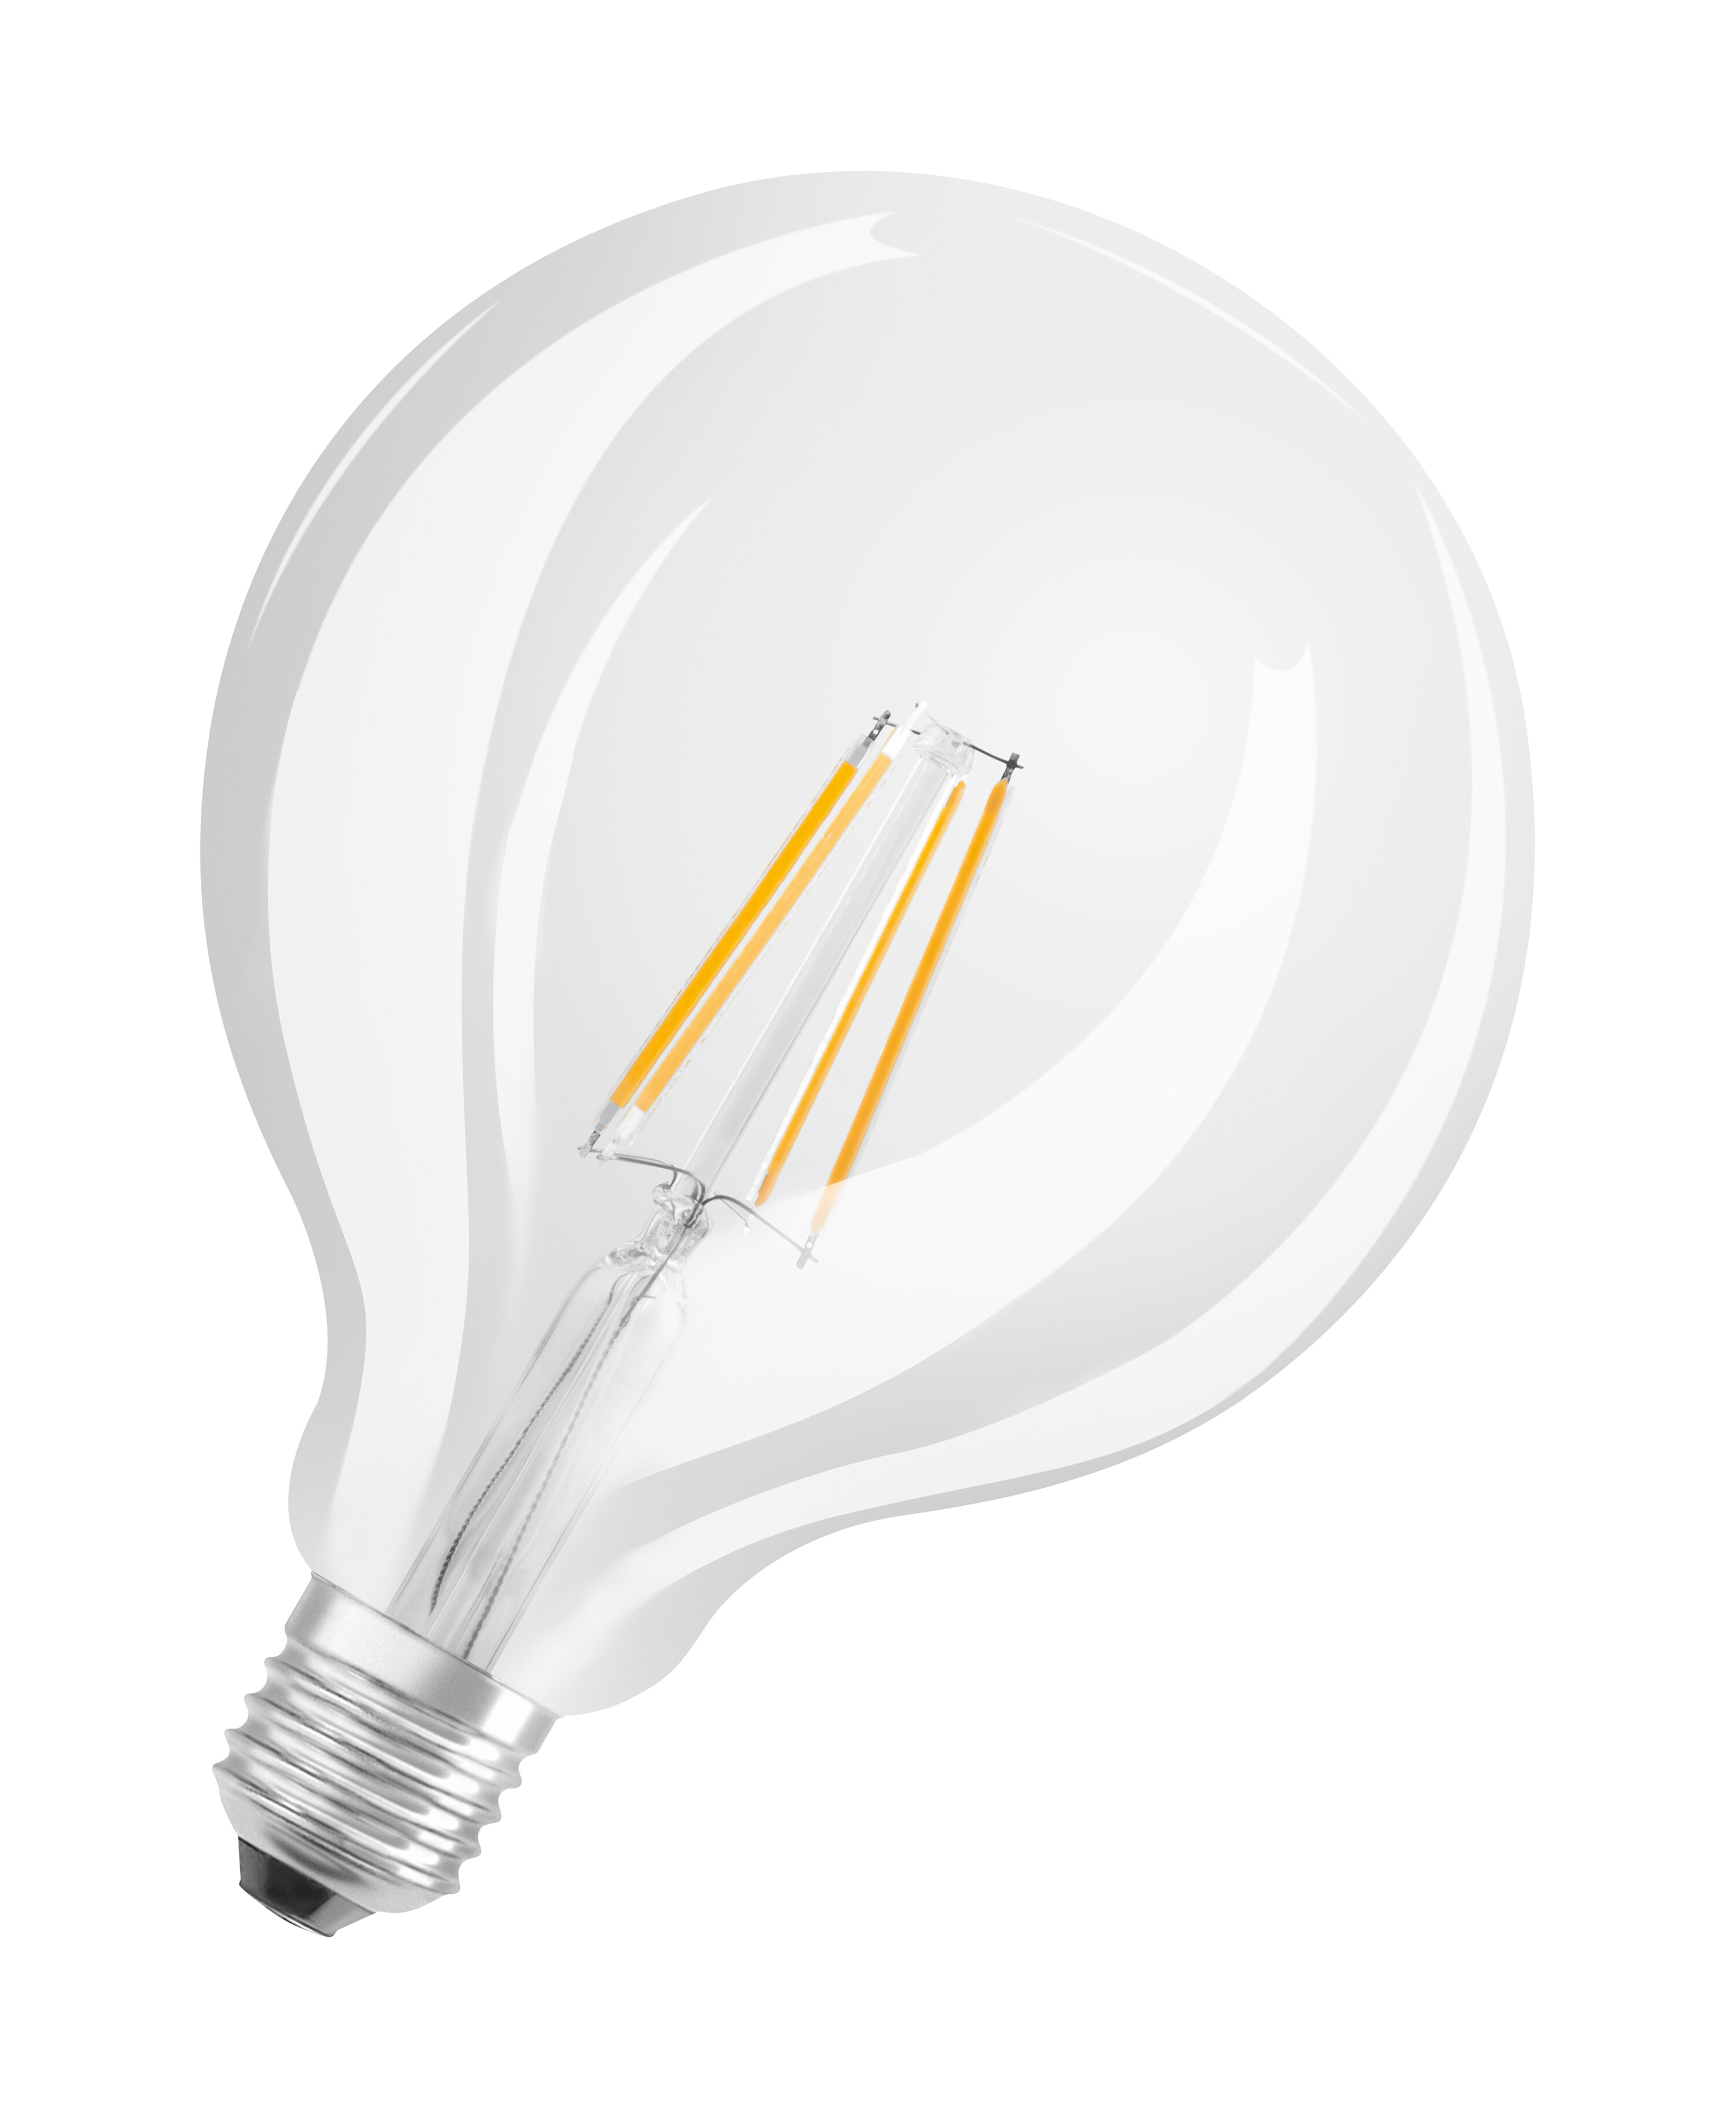 Warmweiß OSRAM  GLOBE Lumen Lampe FILAMENT SUPERSTAR LED CLASSIC LED PLUS 1521